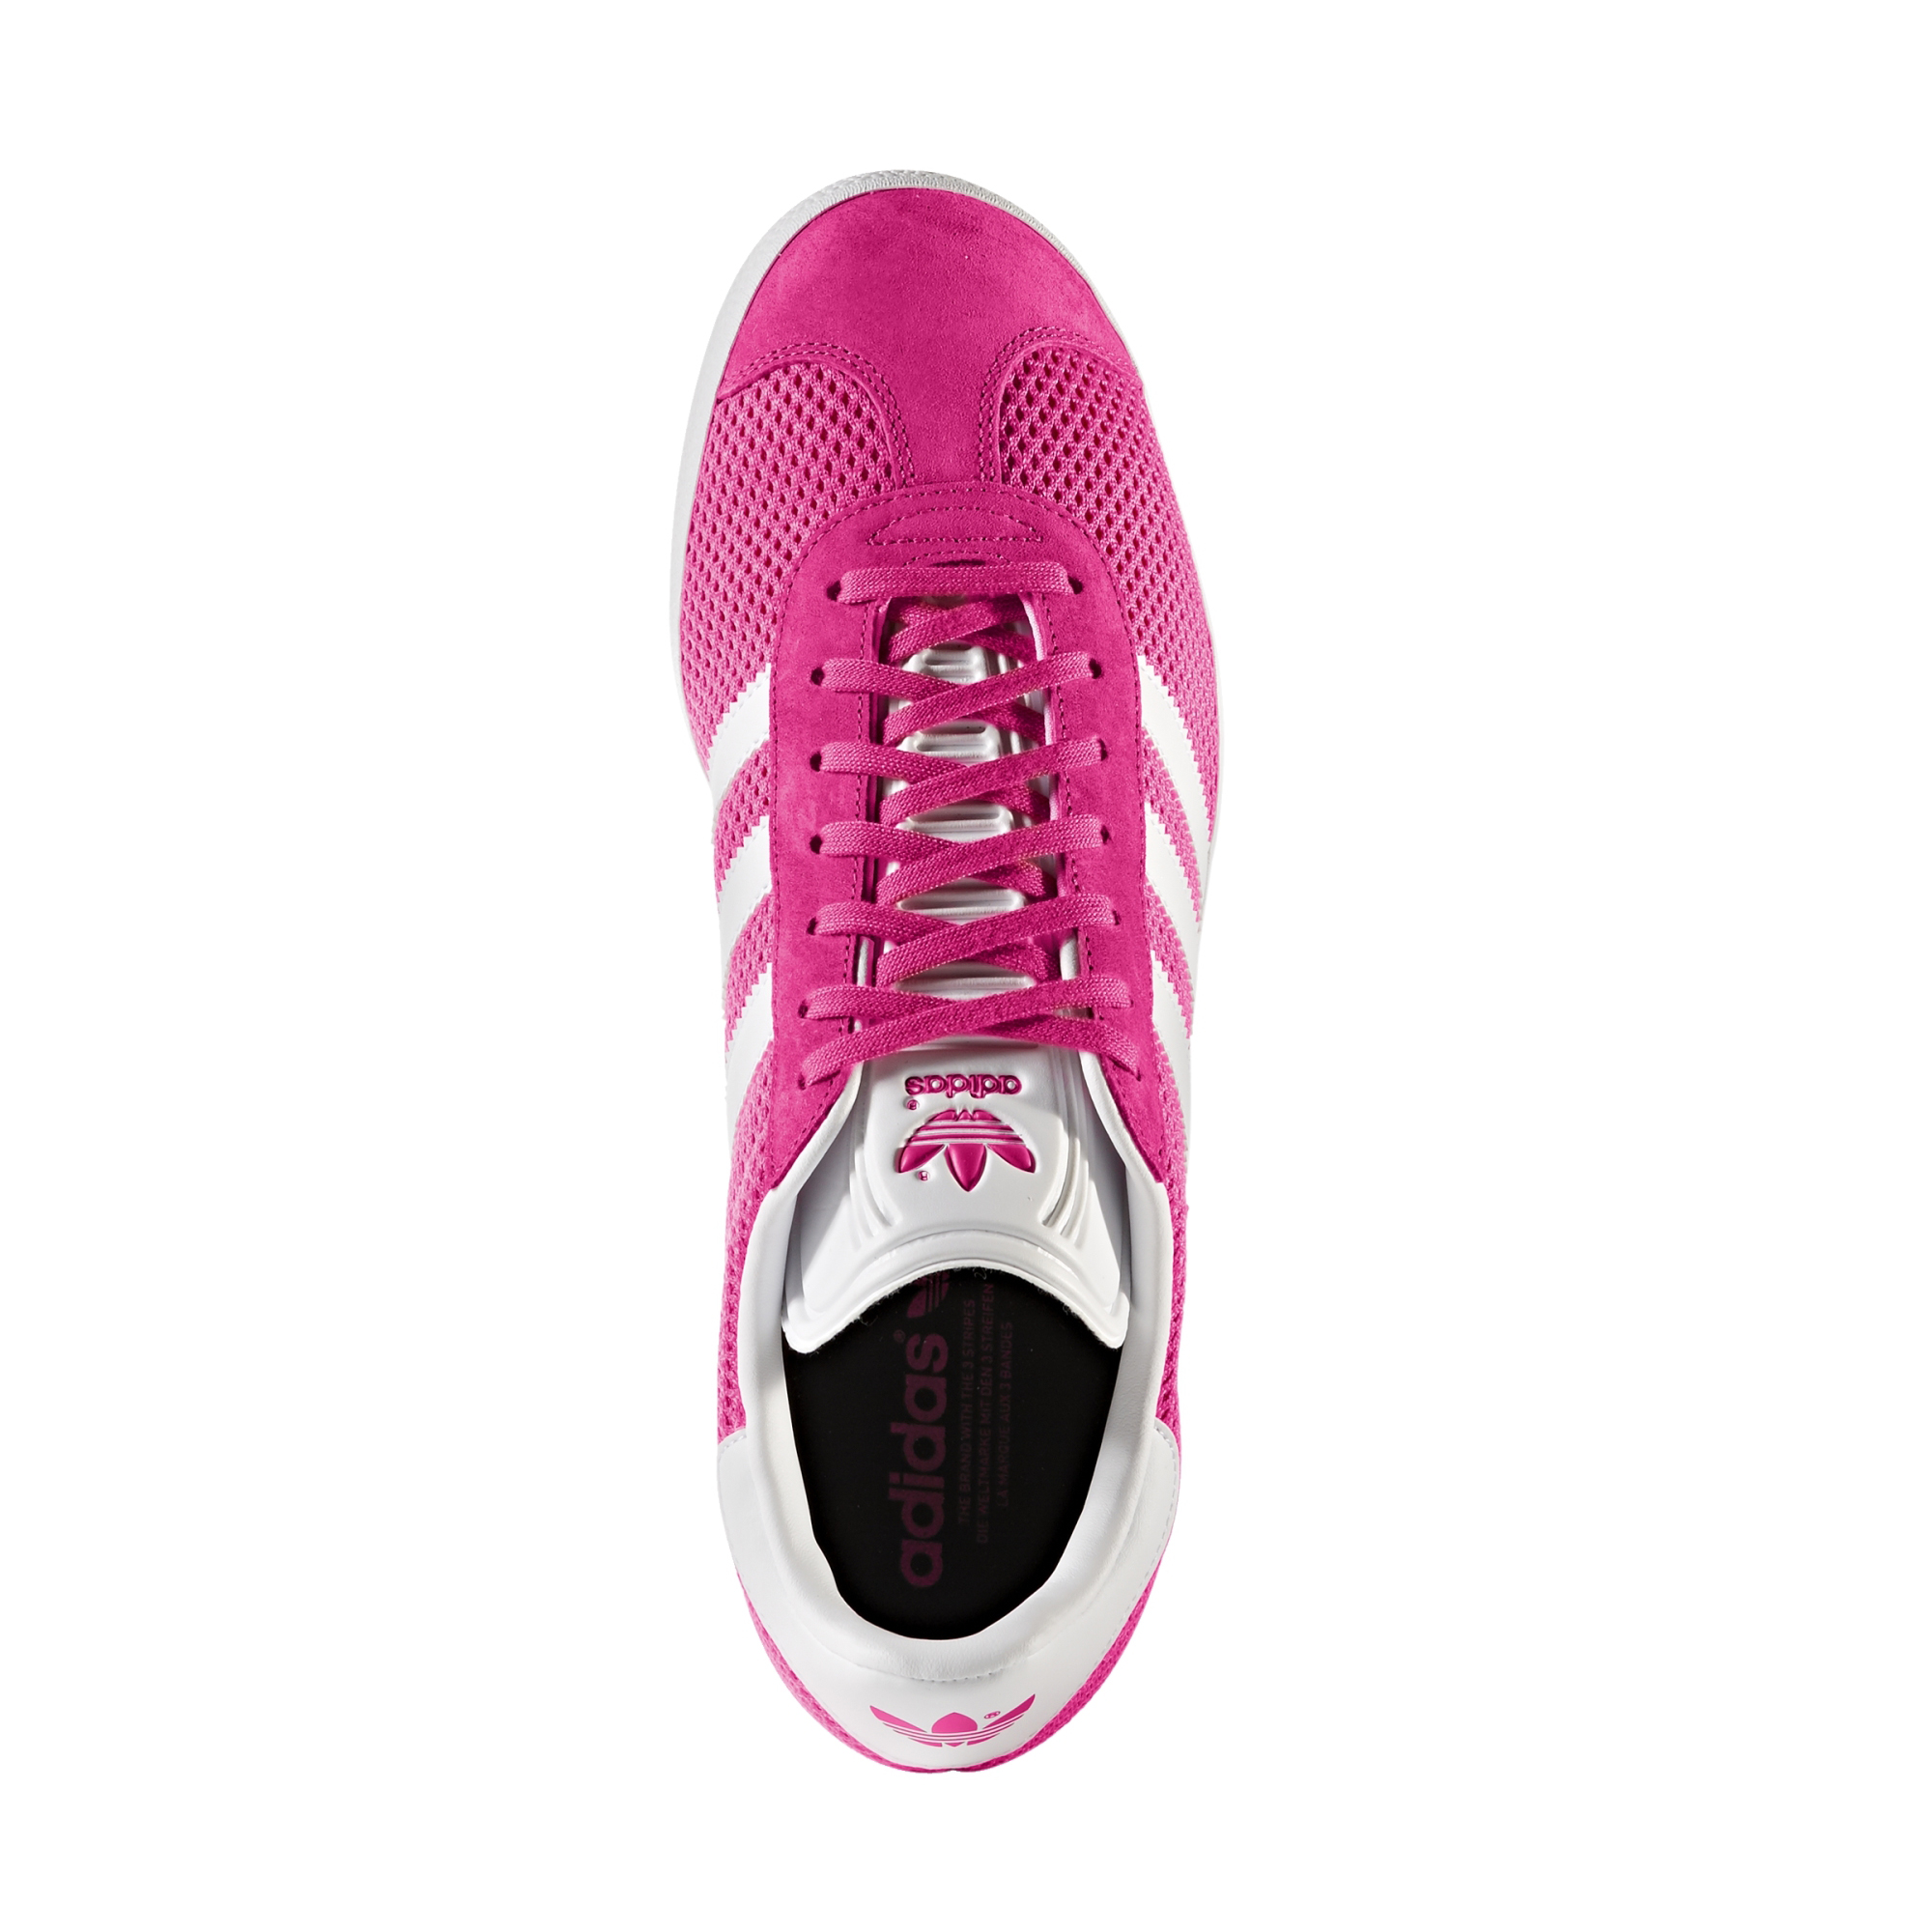 Adidas Originals (shock pink/white/pink)